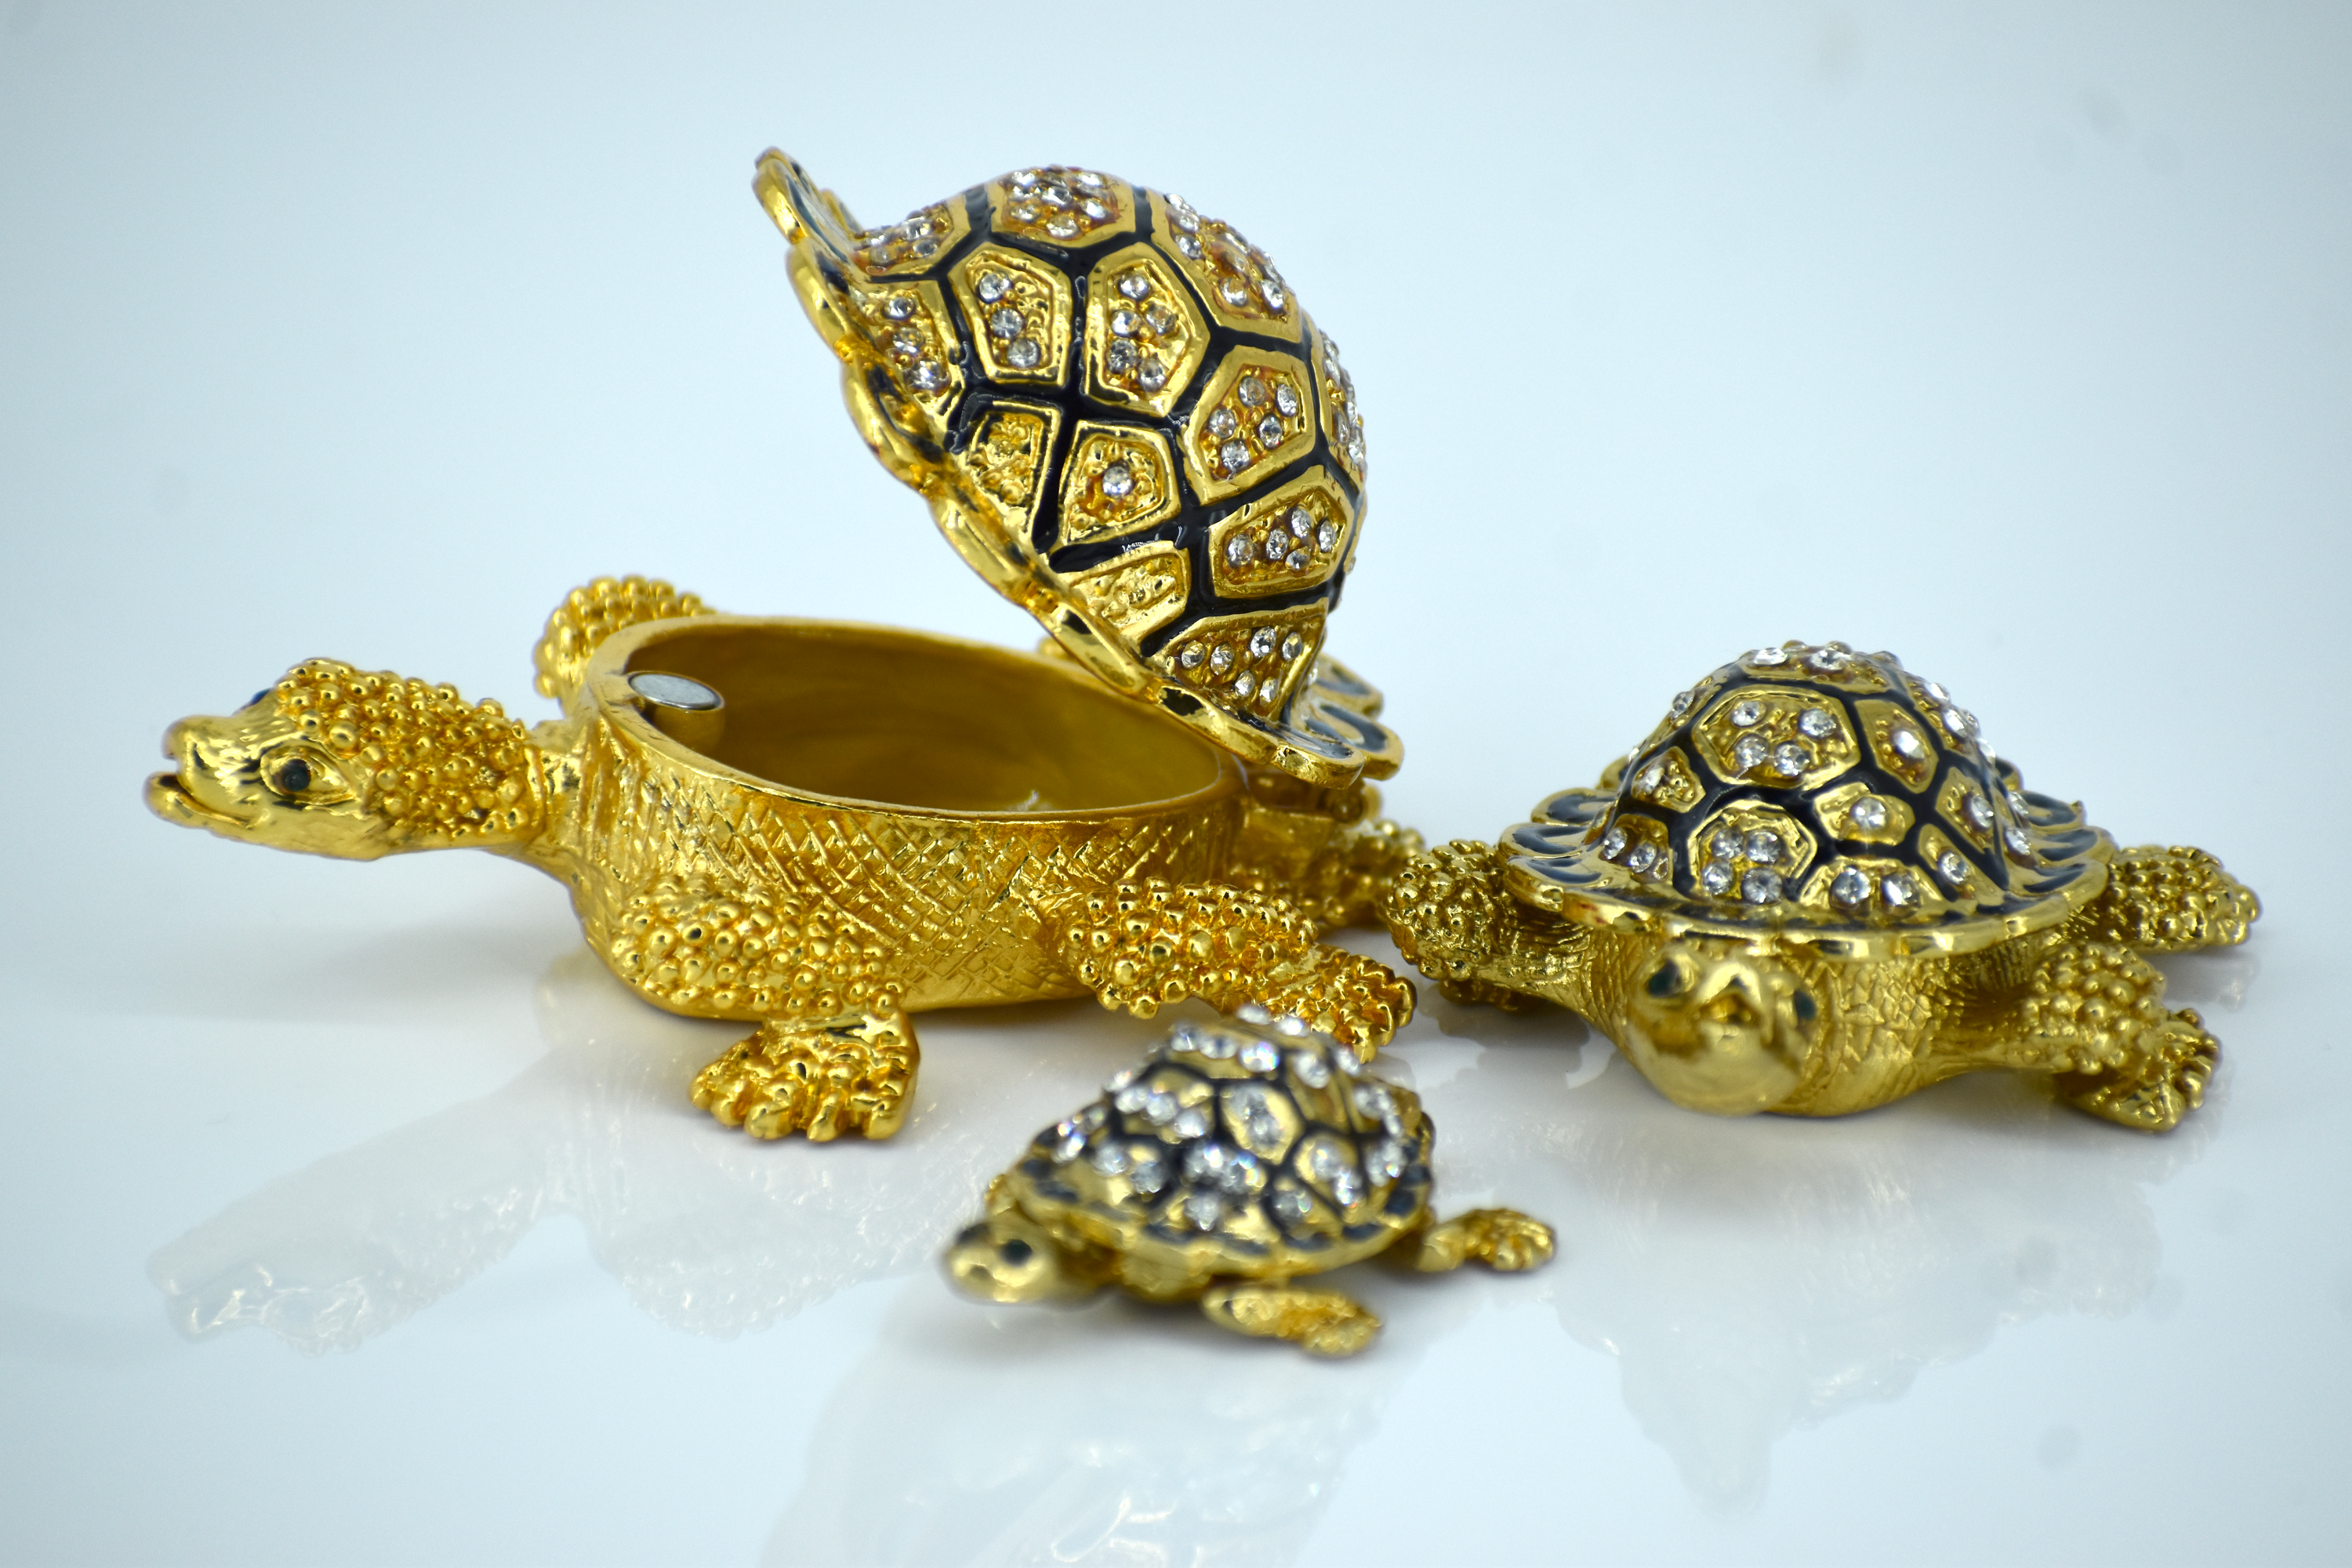 3 Piece Turtles Decor Trinket Box Set I Decoration Piece I Pakistani Artisan Design I Decoration Piece Accent I Metal Stone Decor